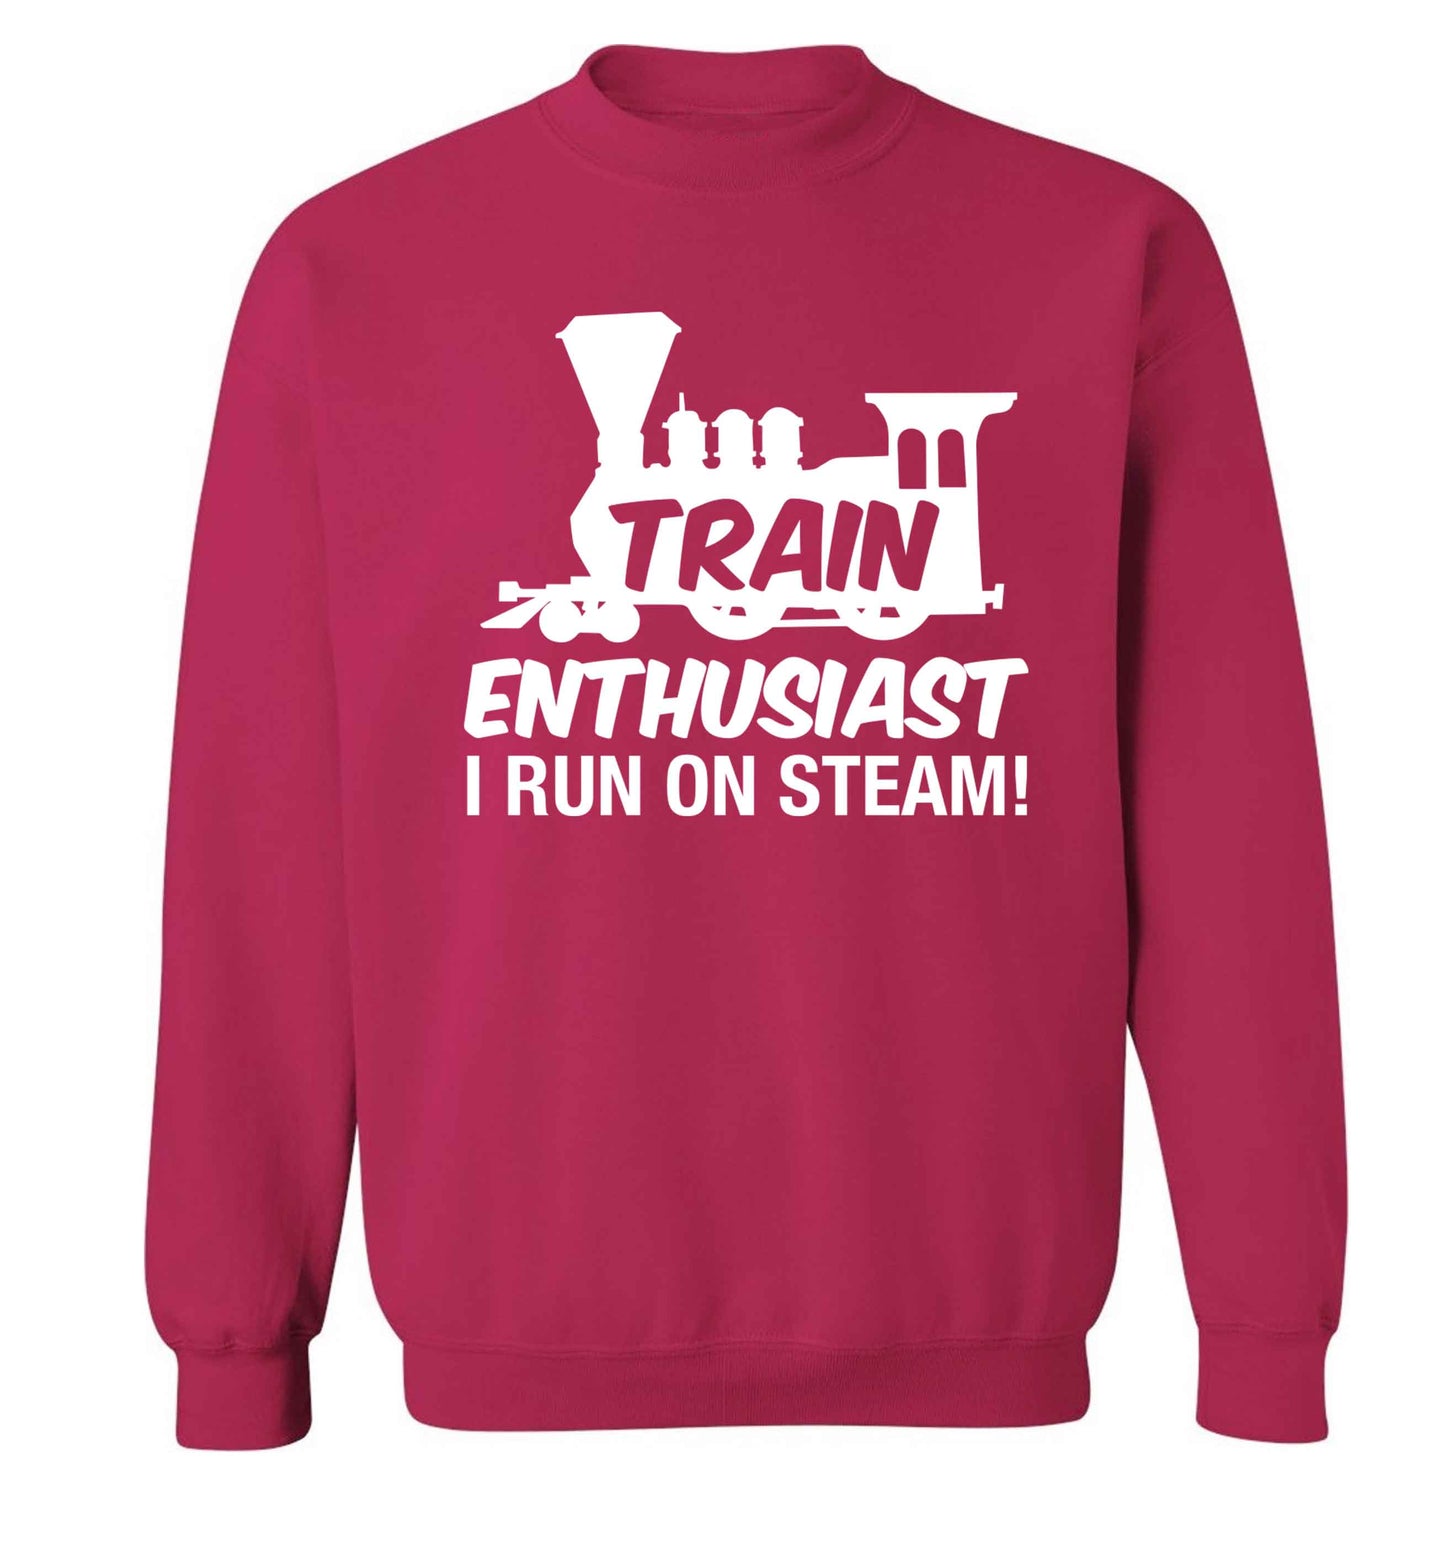 Train enthusiast I run on steam Adult's unisex pink Sweater 2XL